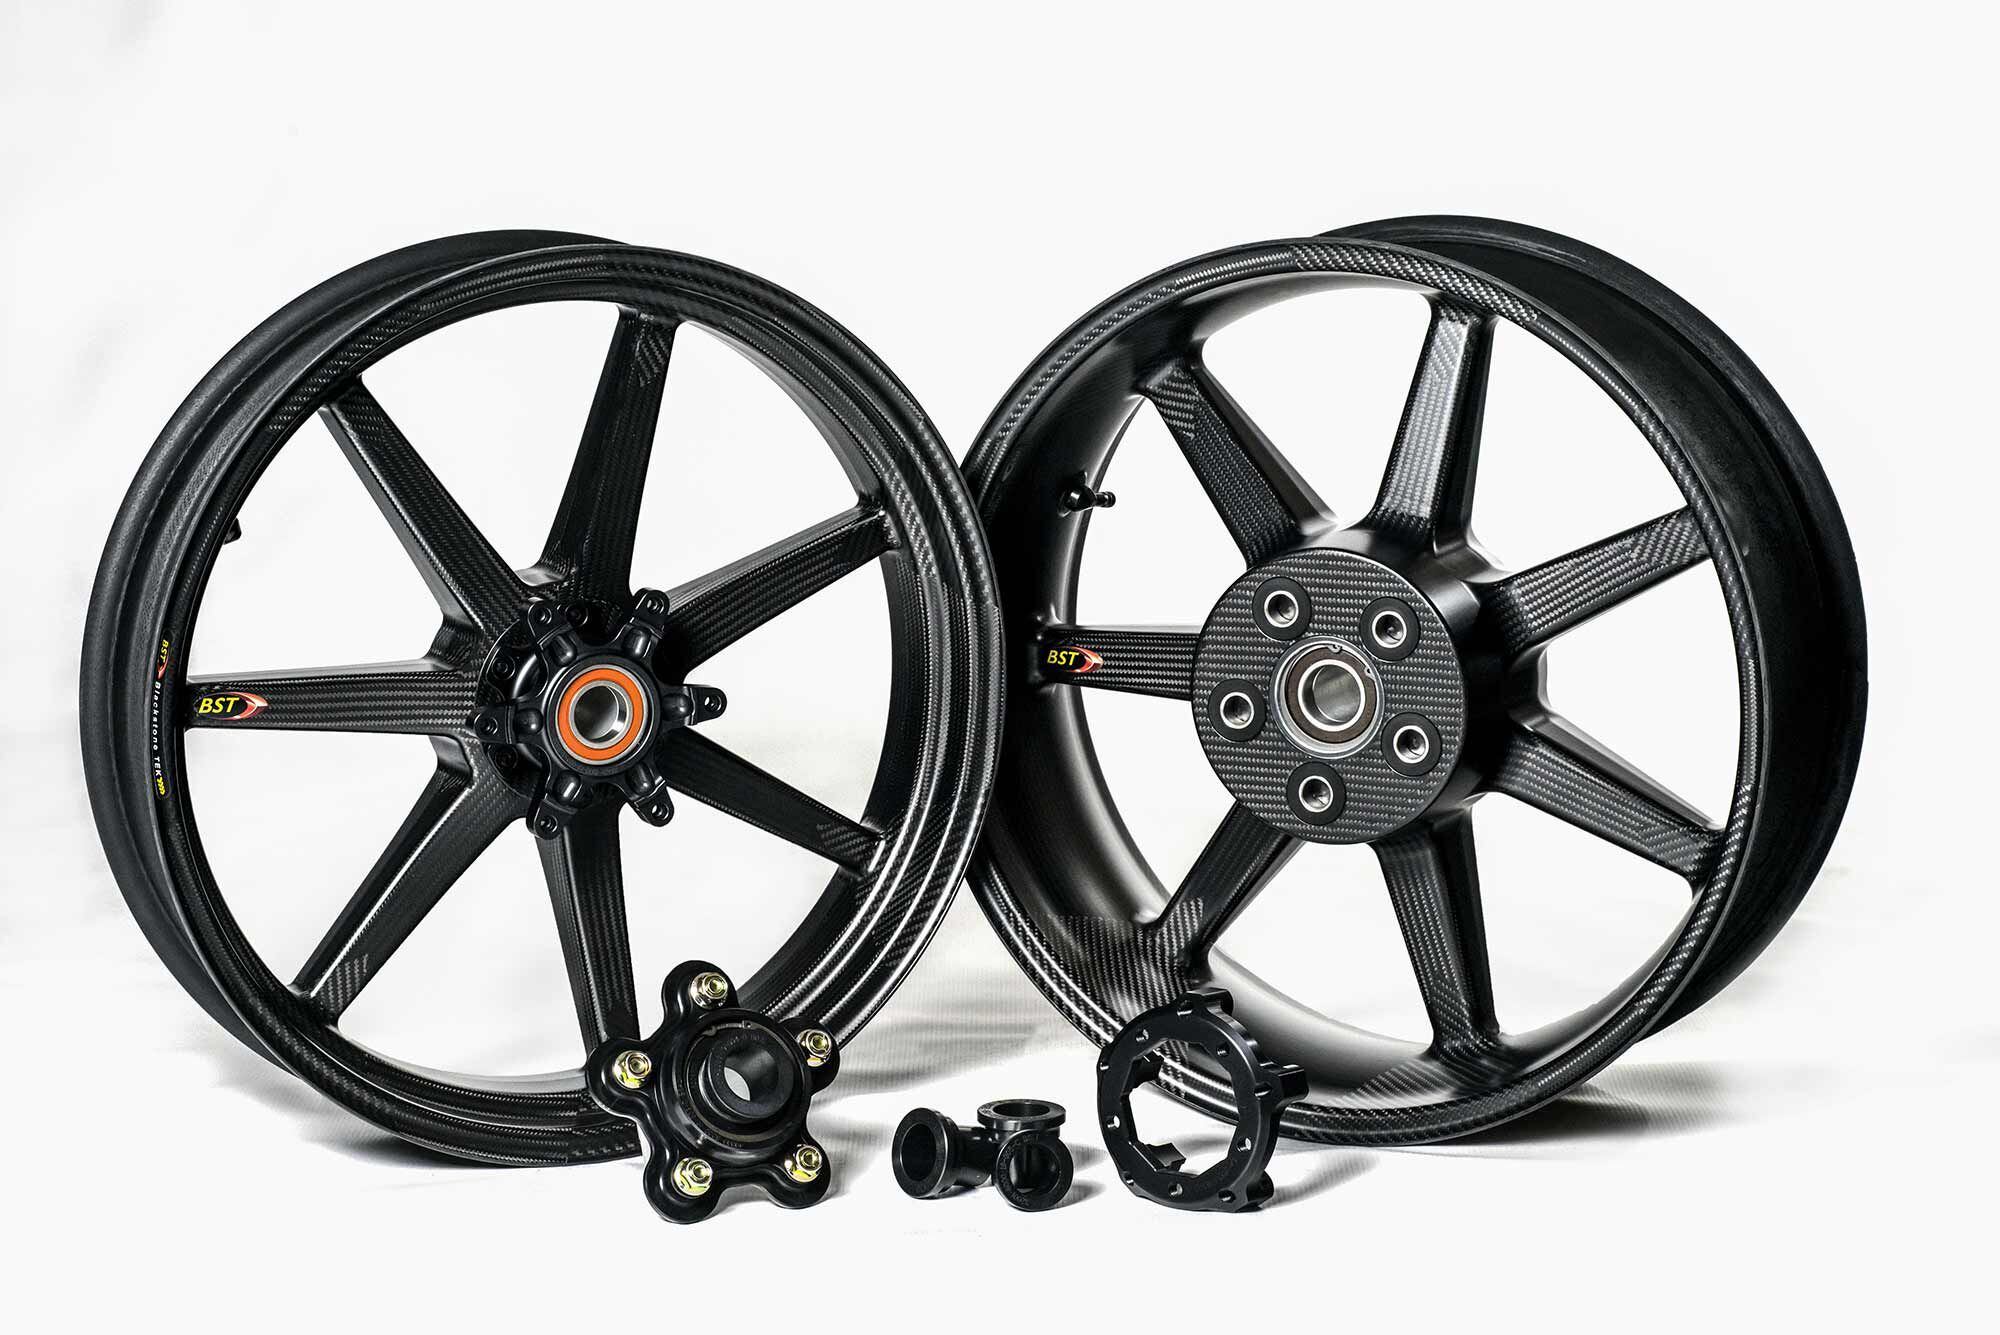 BST’s Black Mamba wheels showcase a classic design interpreted in a lightweight material.